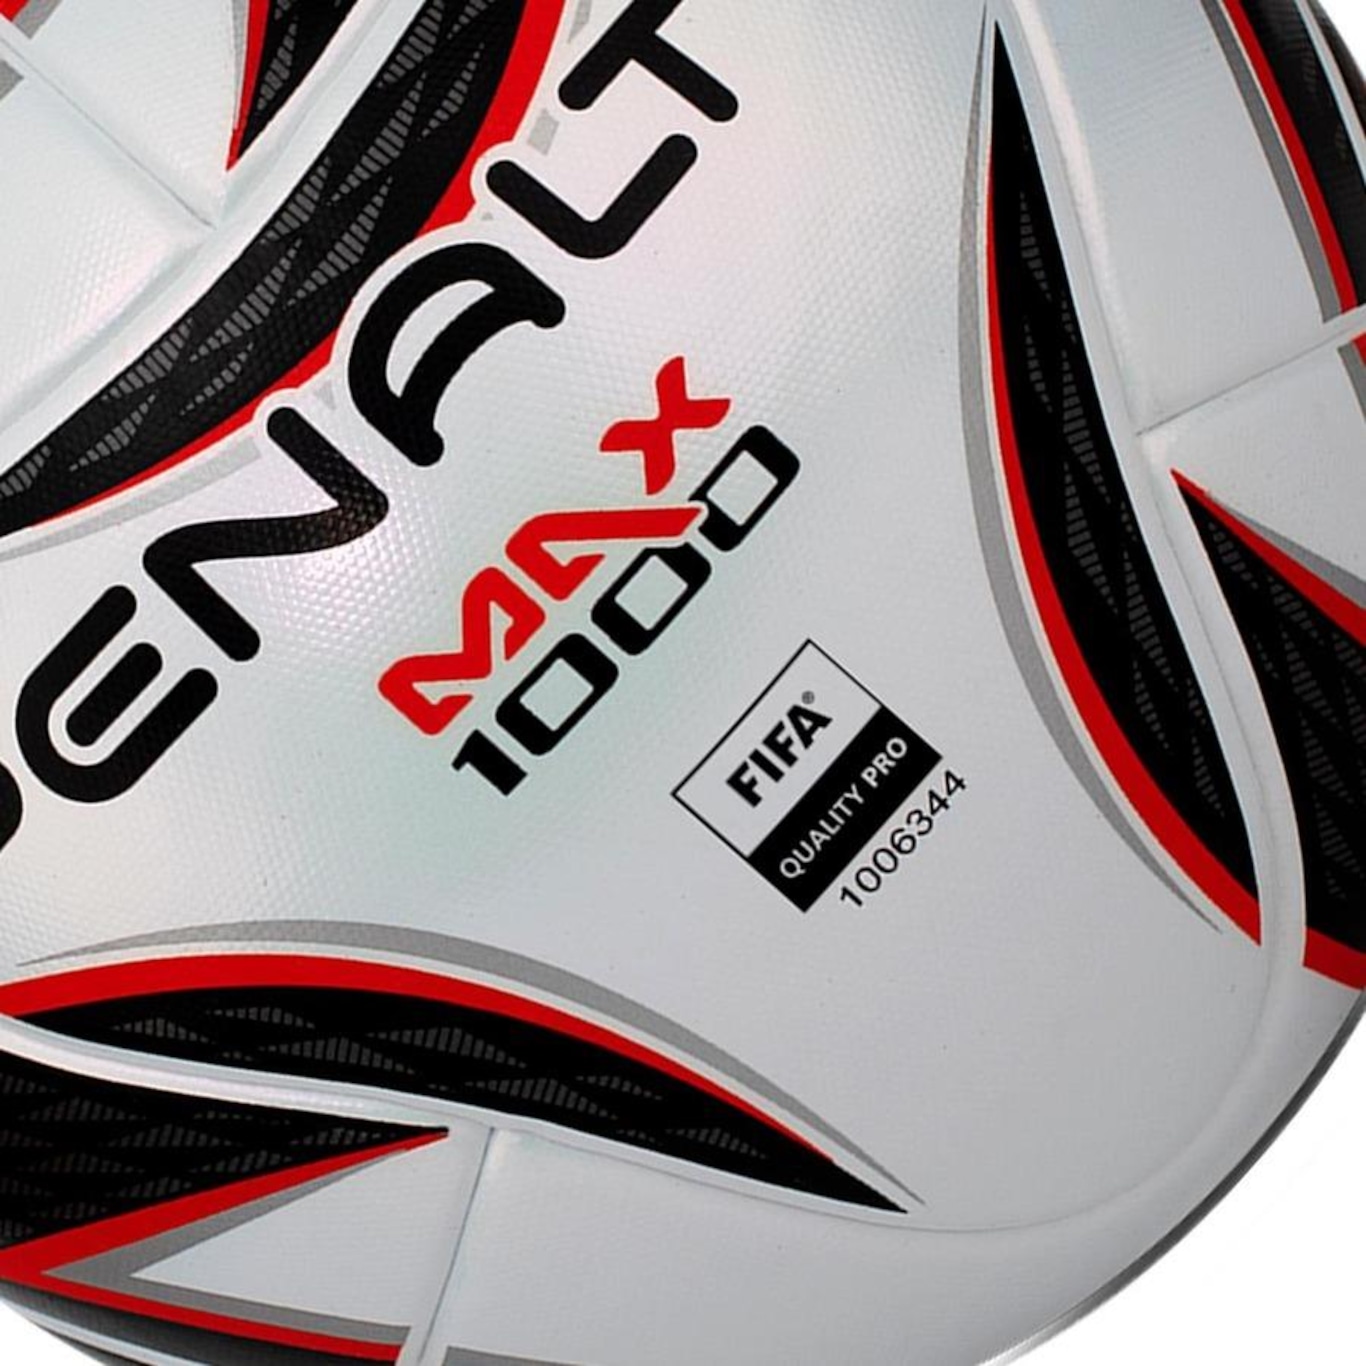 Ball Futsal Penalty Max 1000 XXII - AliExpress